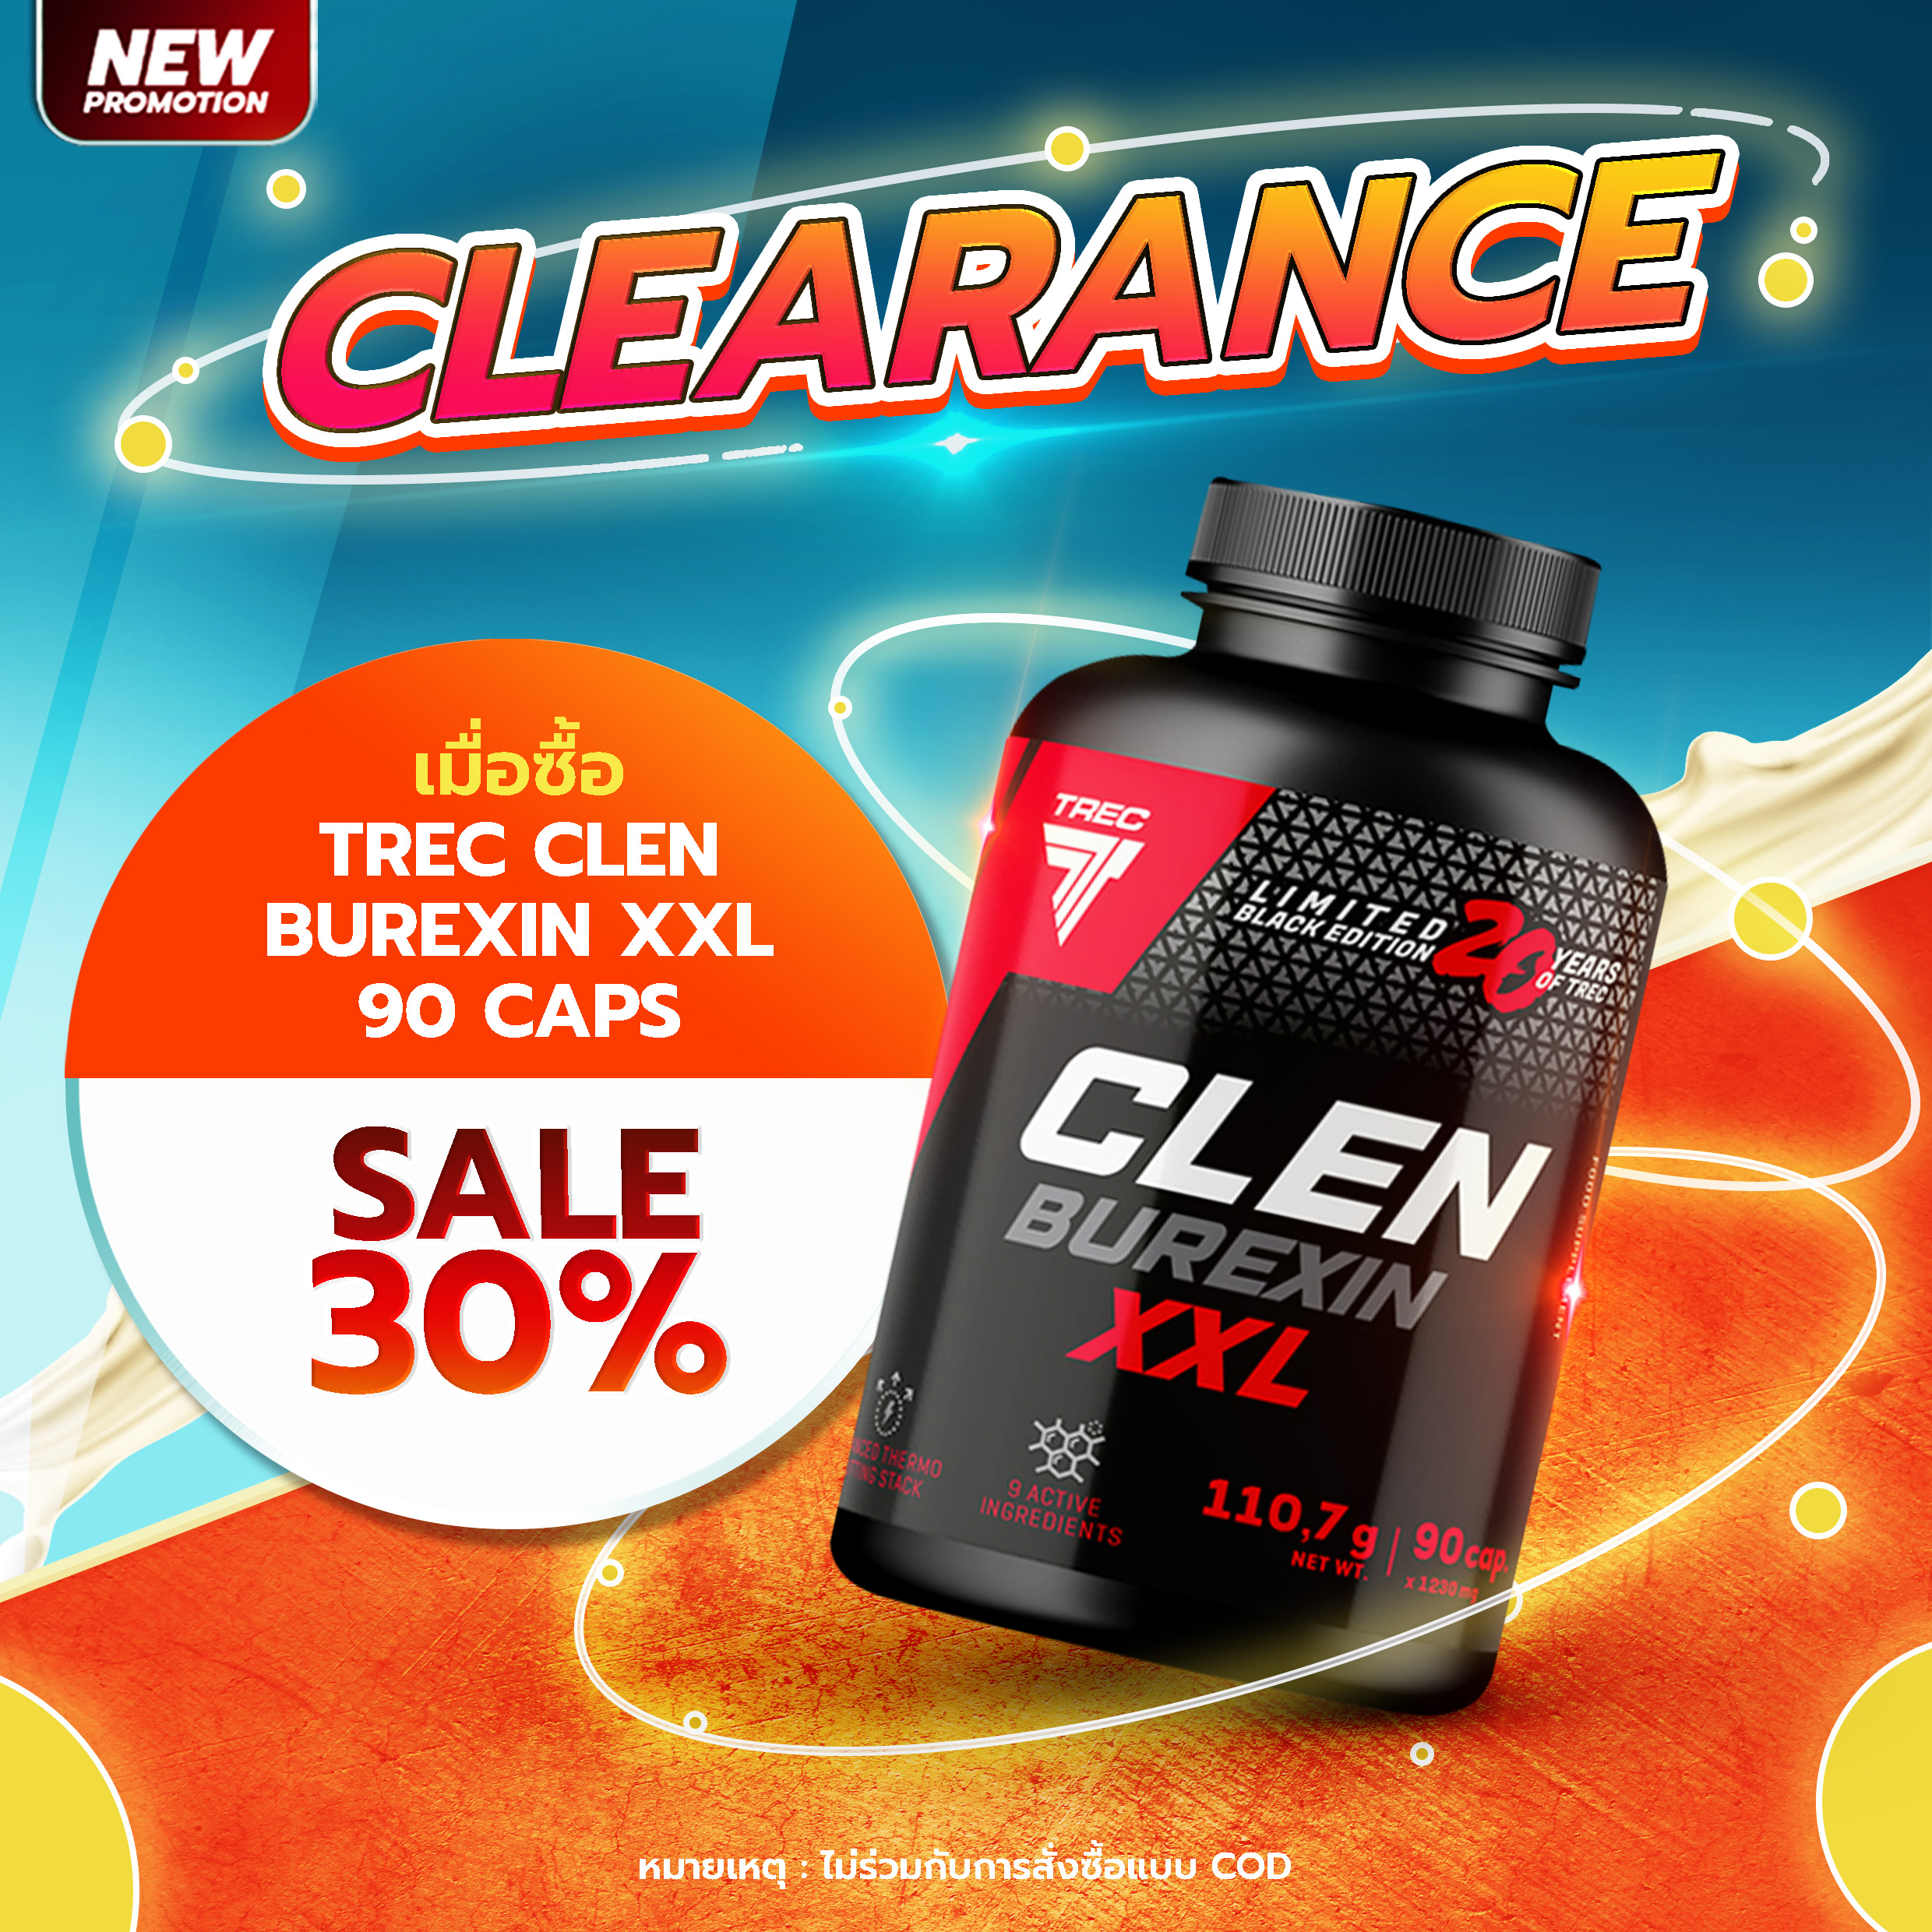 TREC CLENBUREXIN XXL 90 Caps (Clearance Sale 30%)